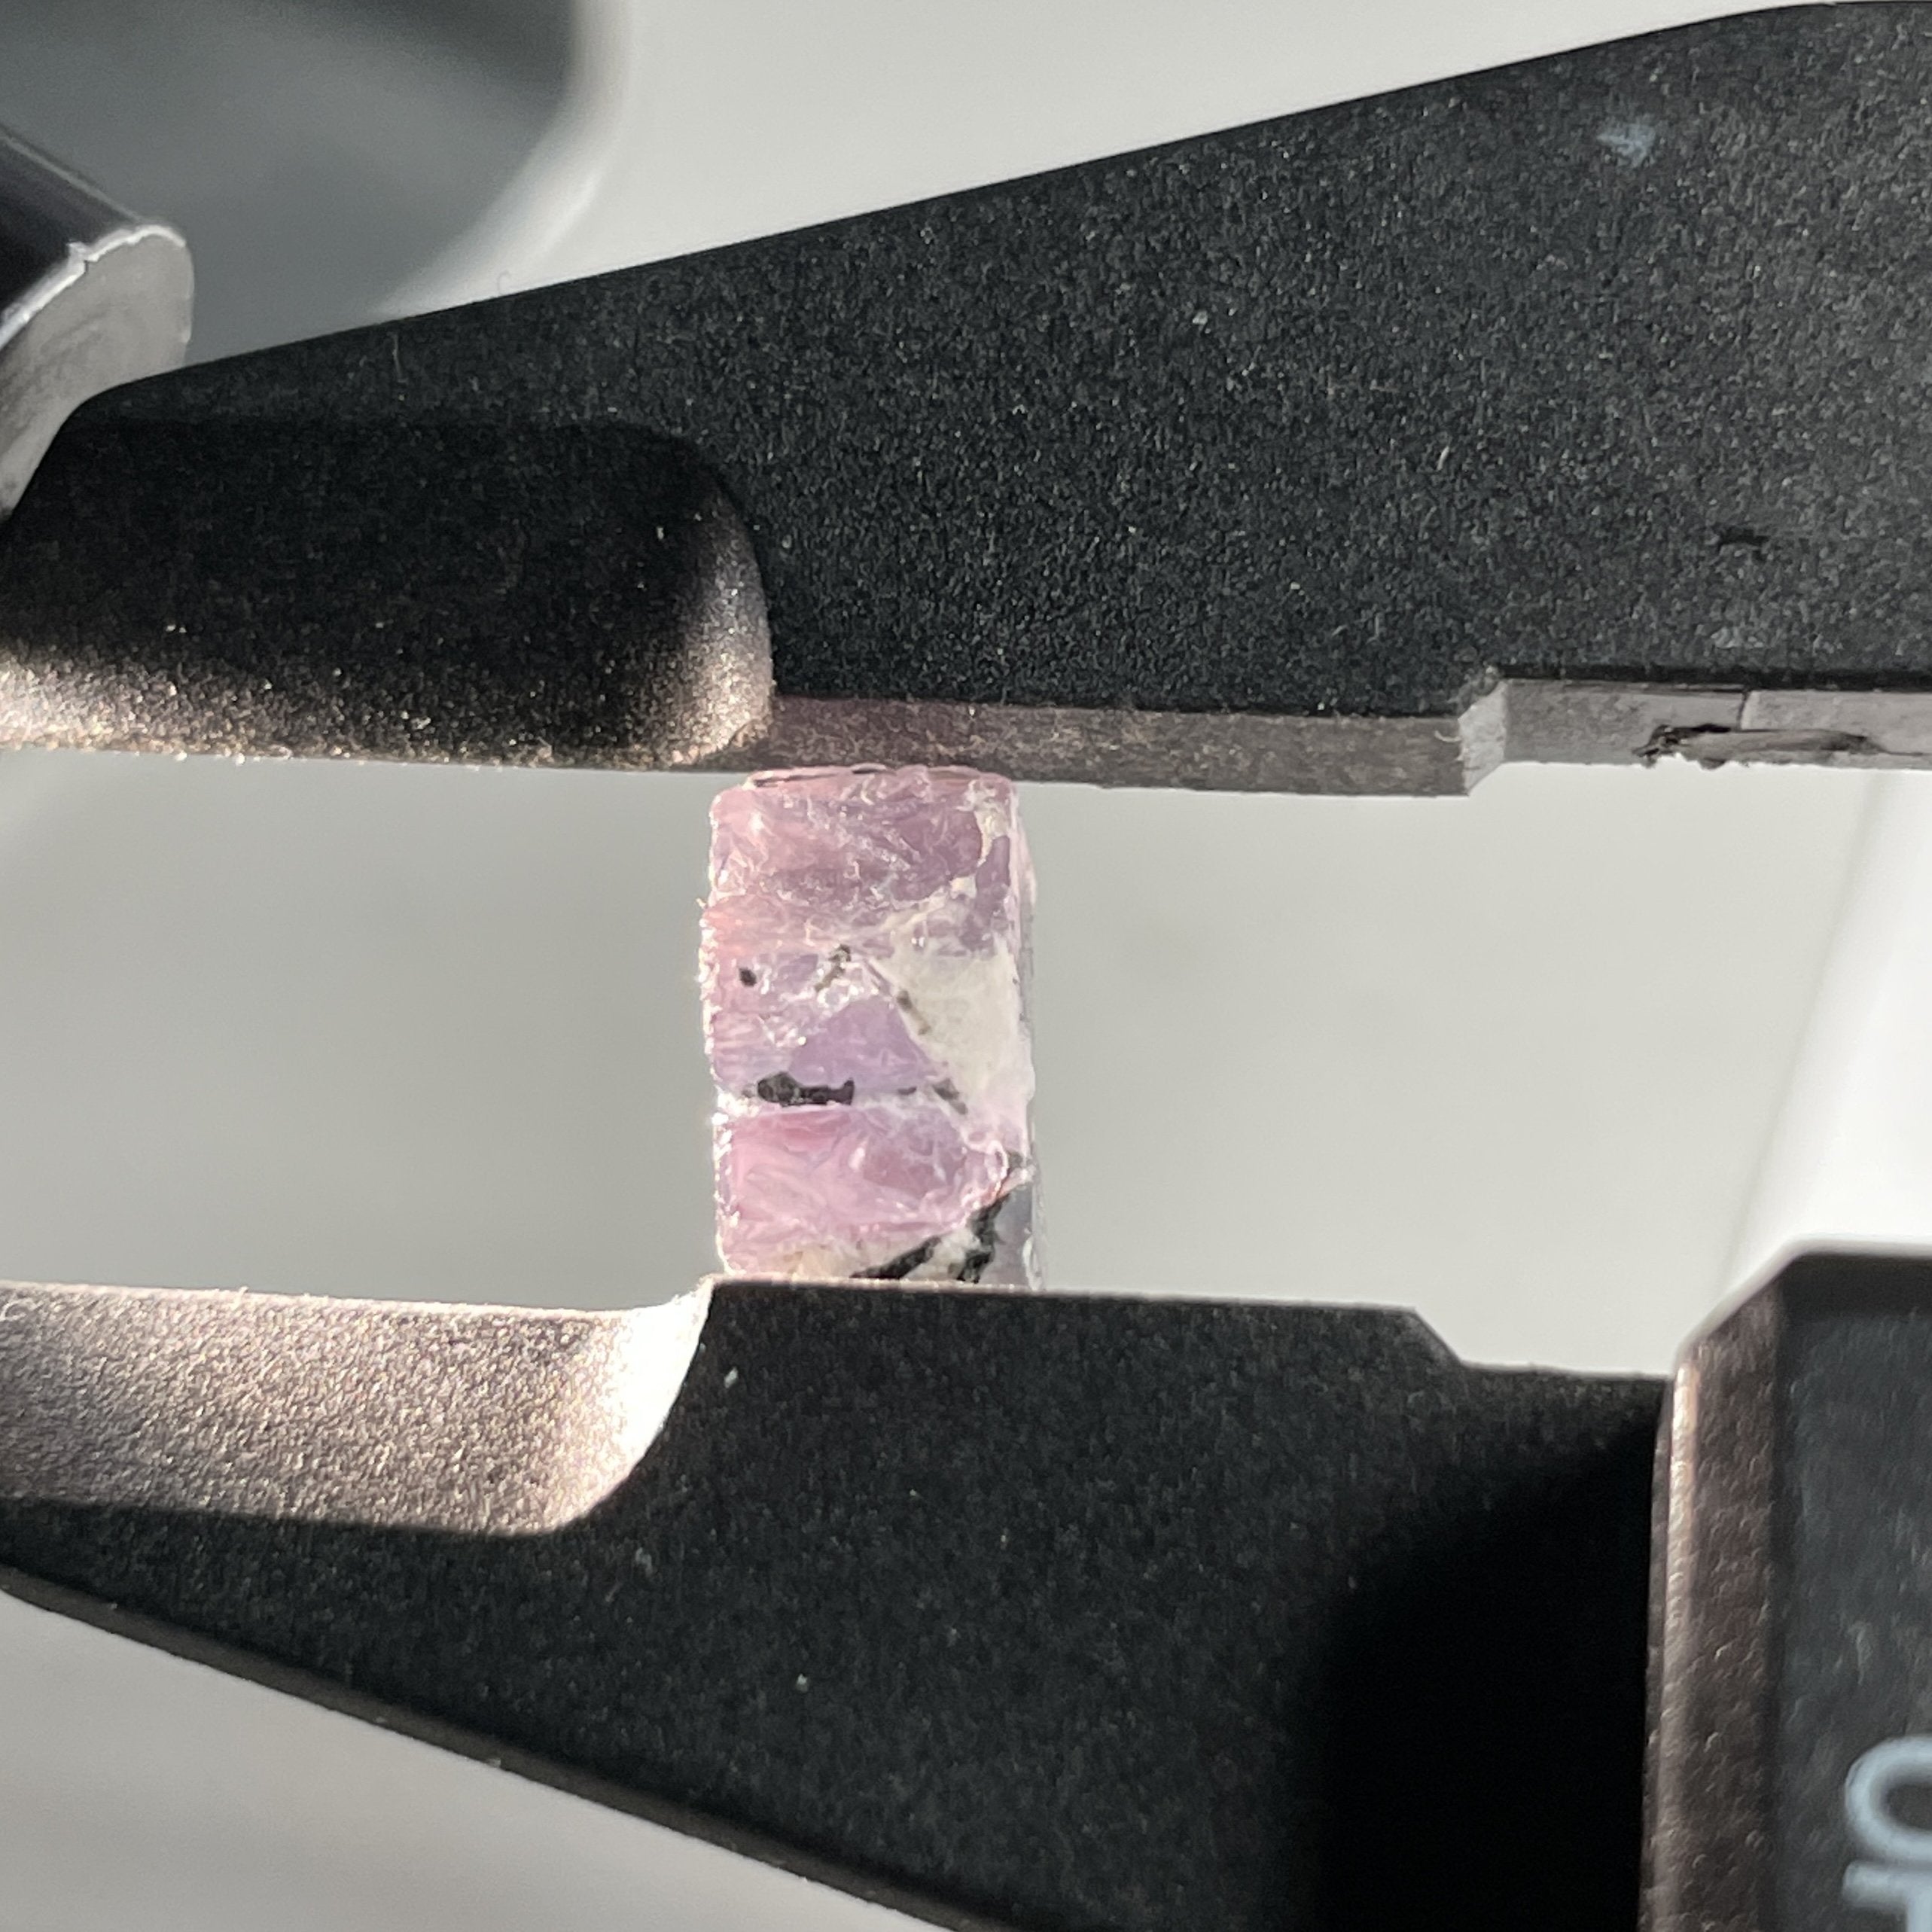 3.80Ct Alexandrite Crystal Tanzania Untreated Unheated. 9 X 5.2 5Mm